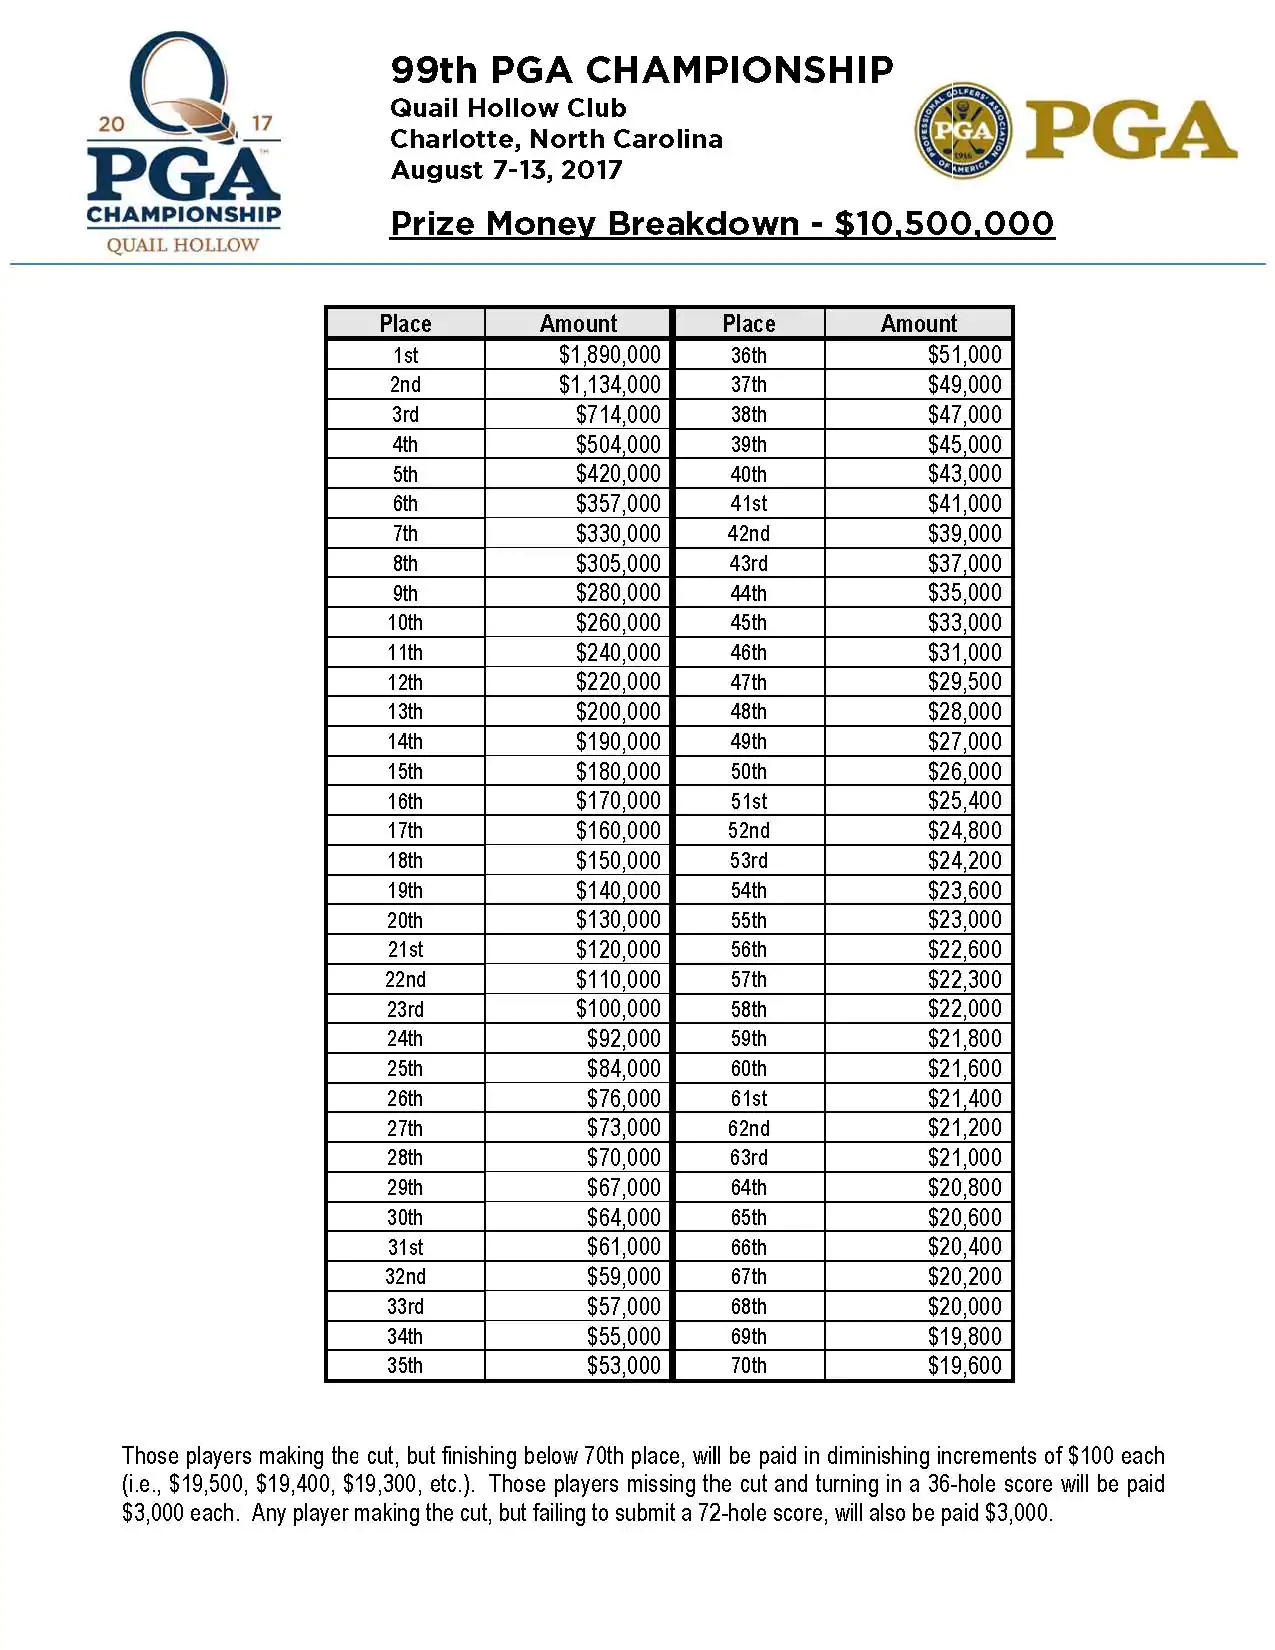 PGA Championship prize money breakdown